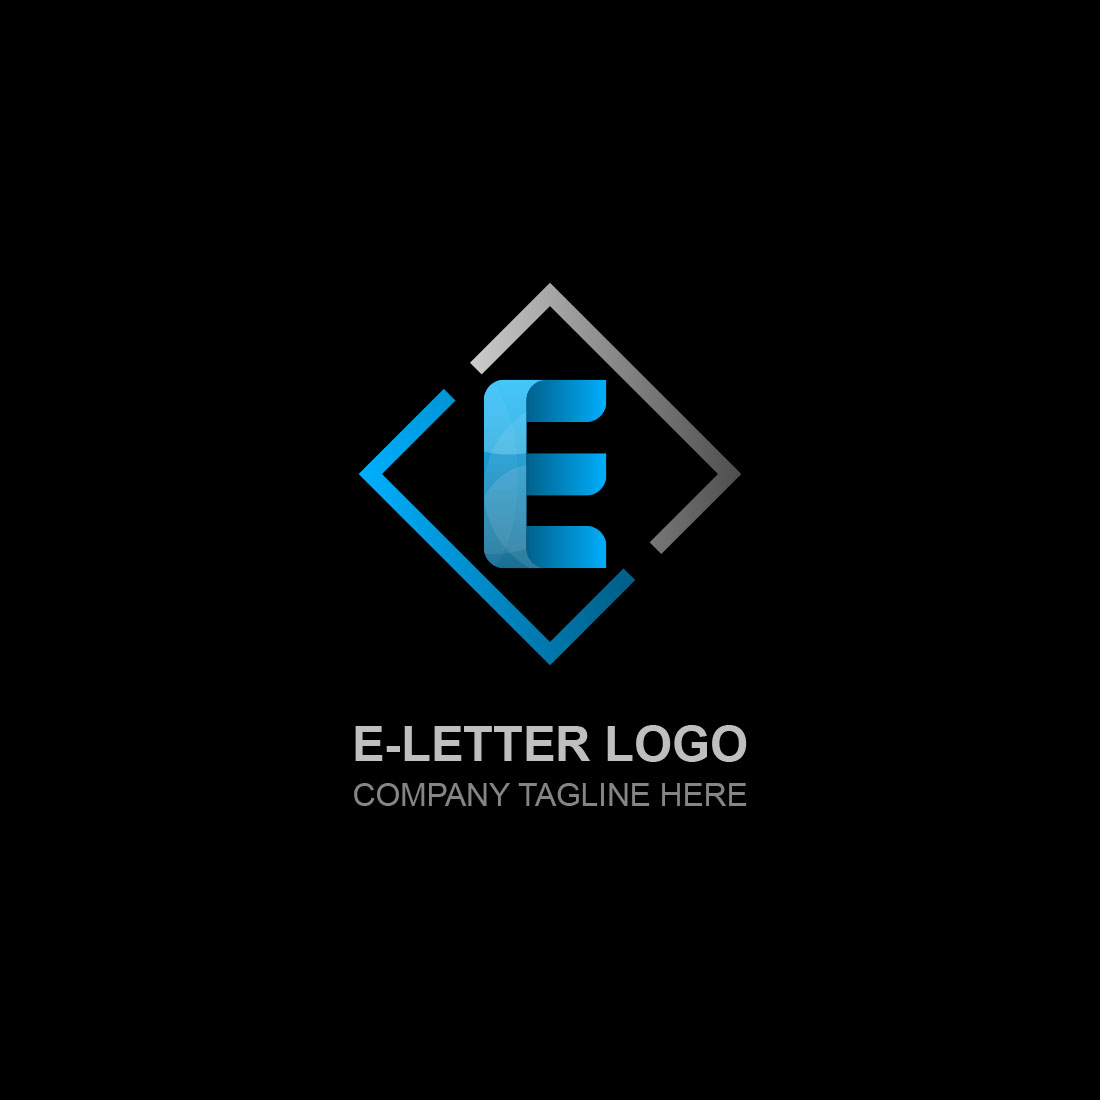 E Letter Logo with black background.